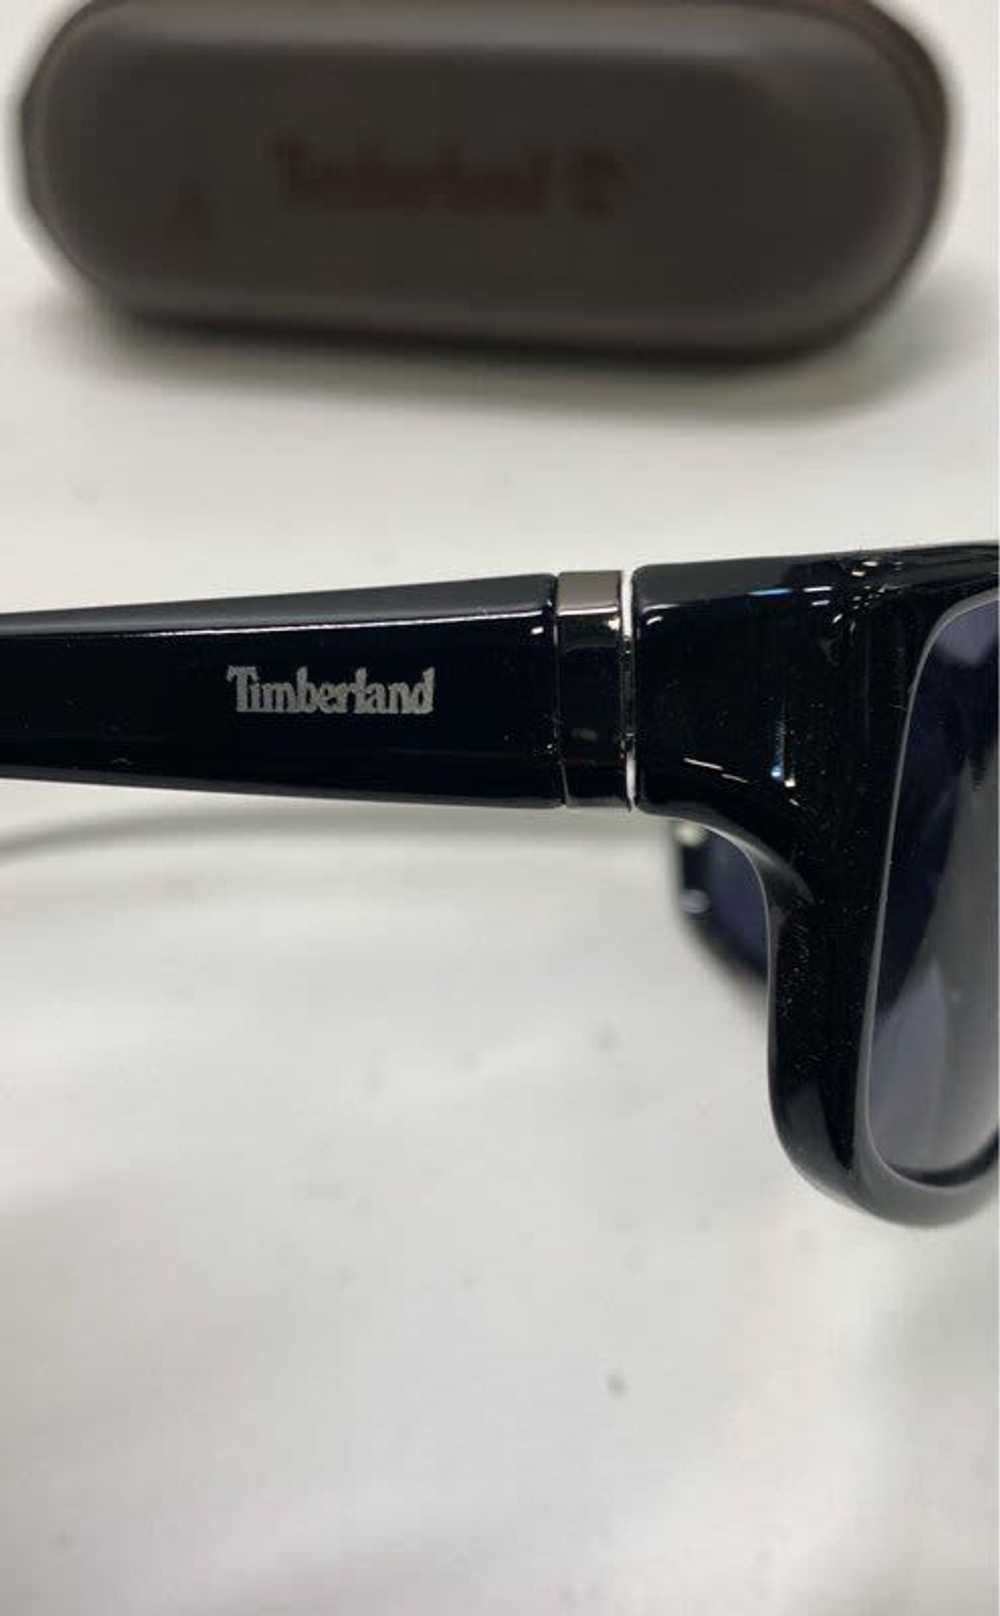 Timberland Black Sunglasses - Size One Size - image 6